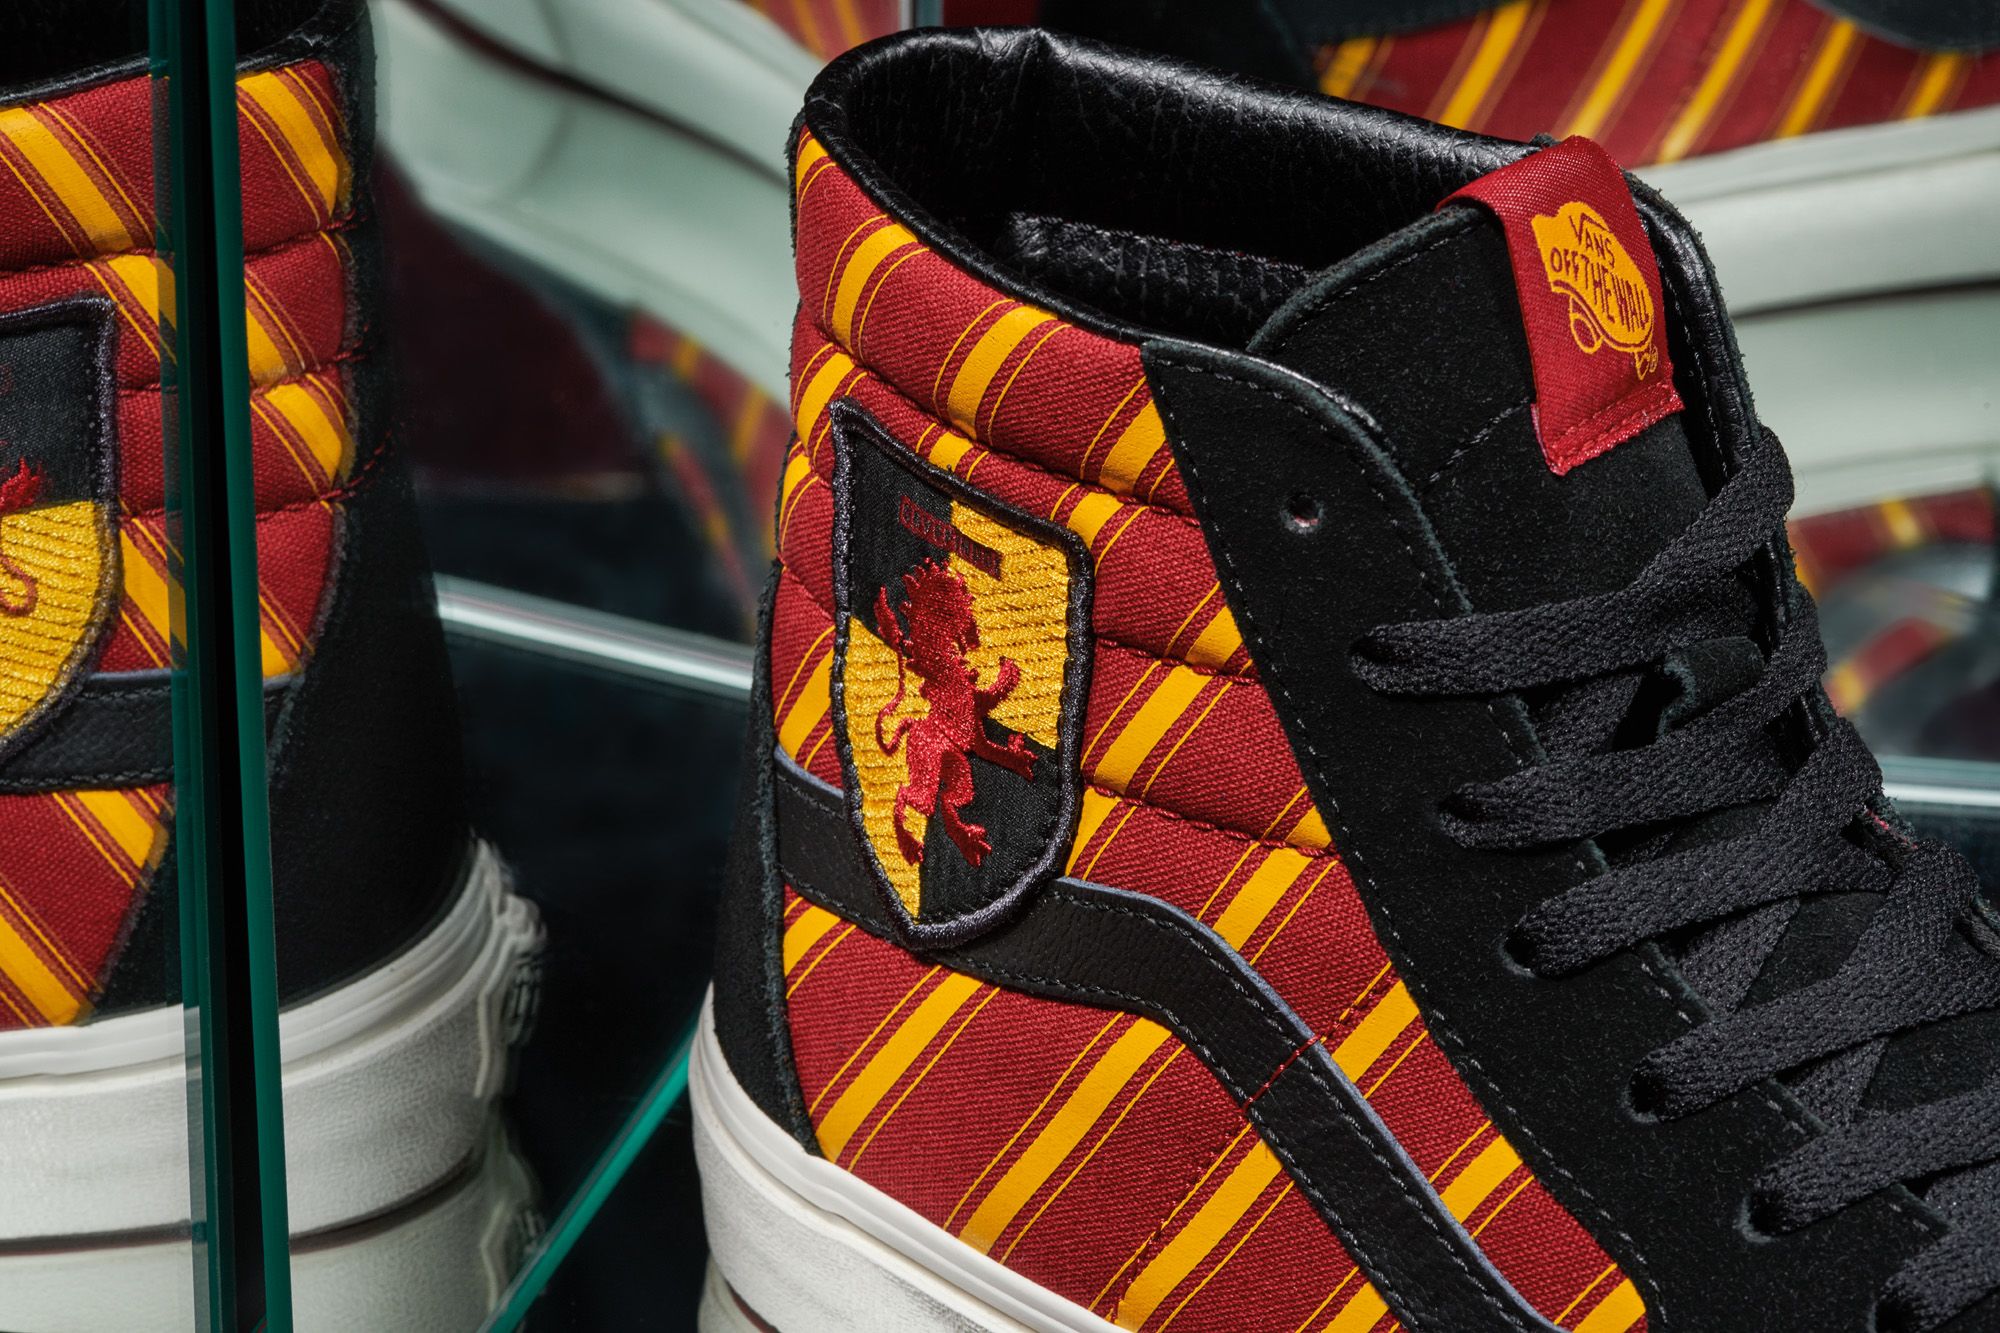 Vans' Harry Potter Sneaker Collection Goes On Sale | Cnn